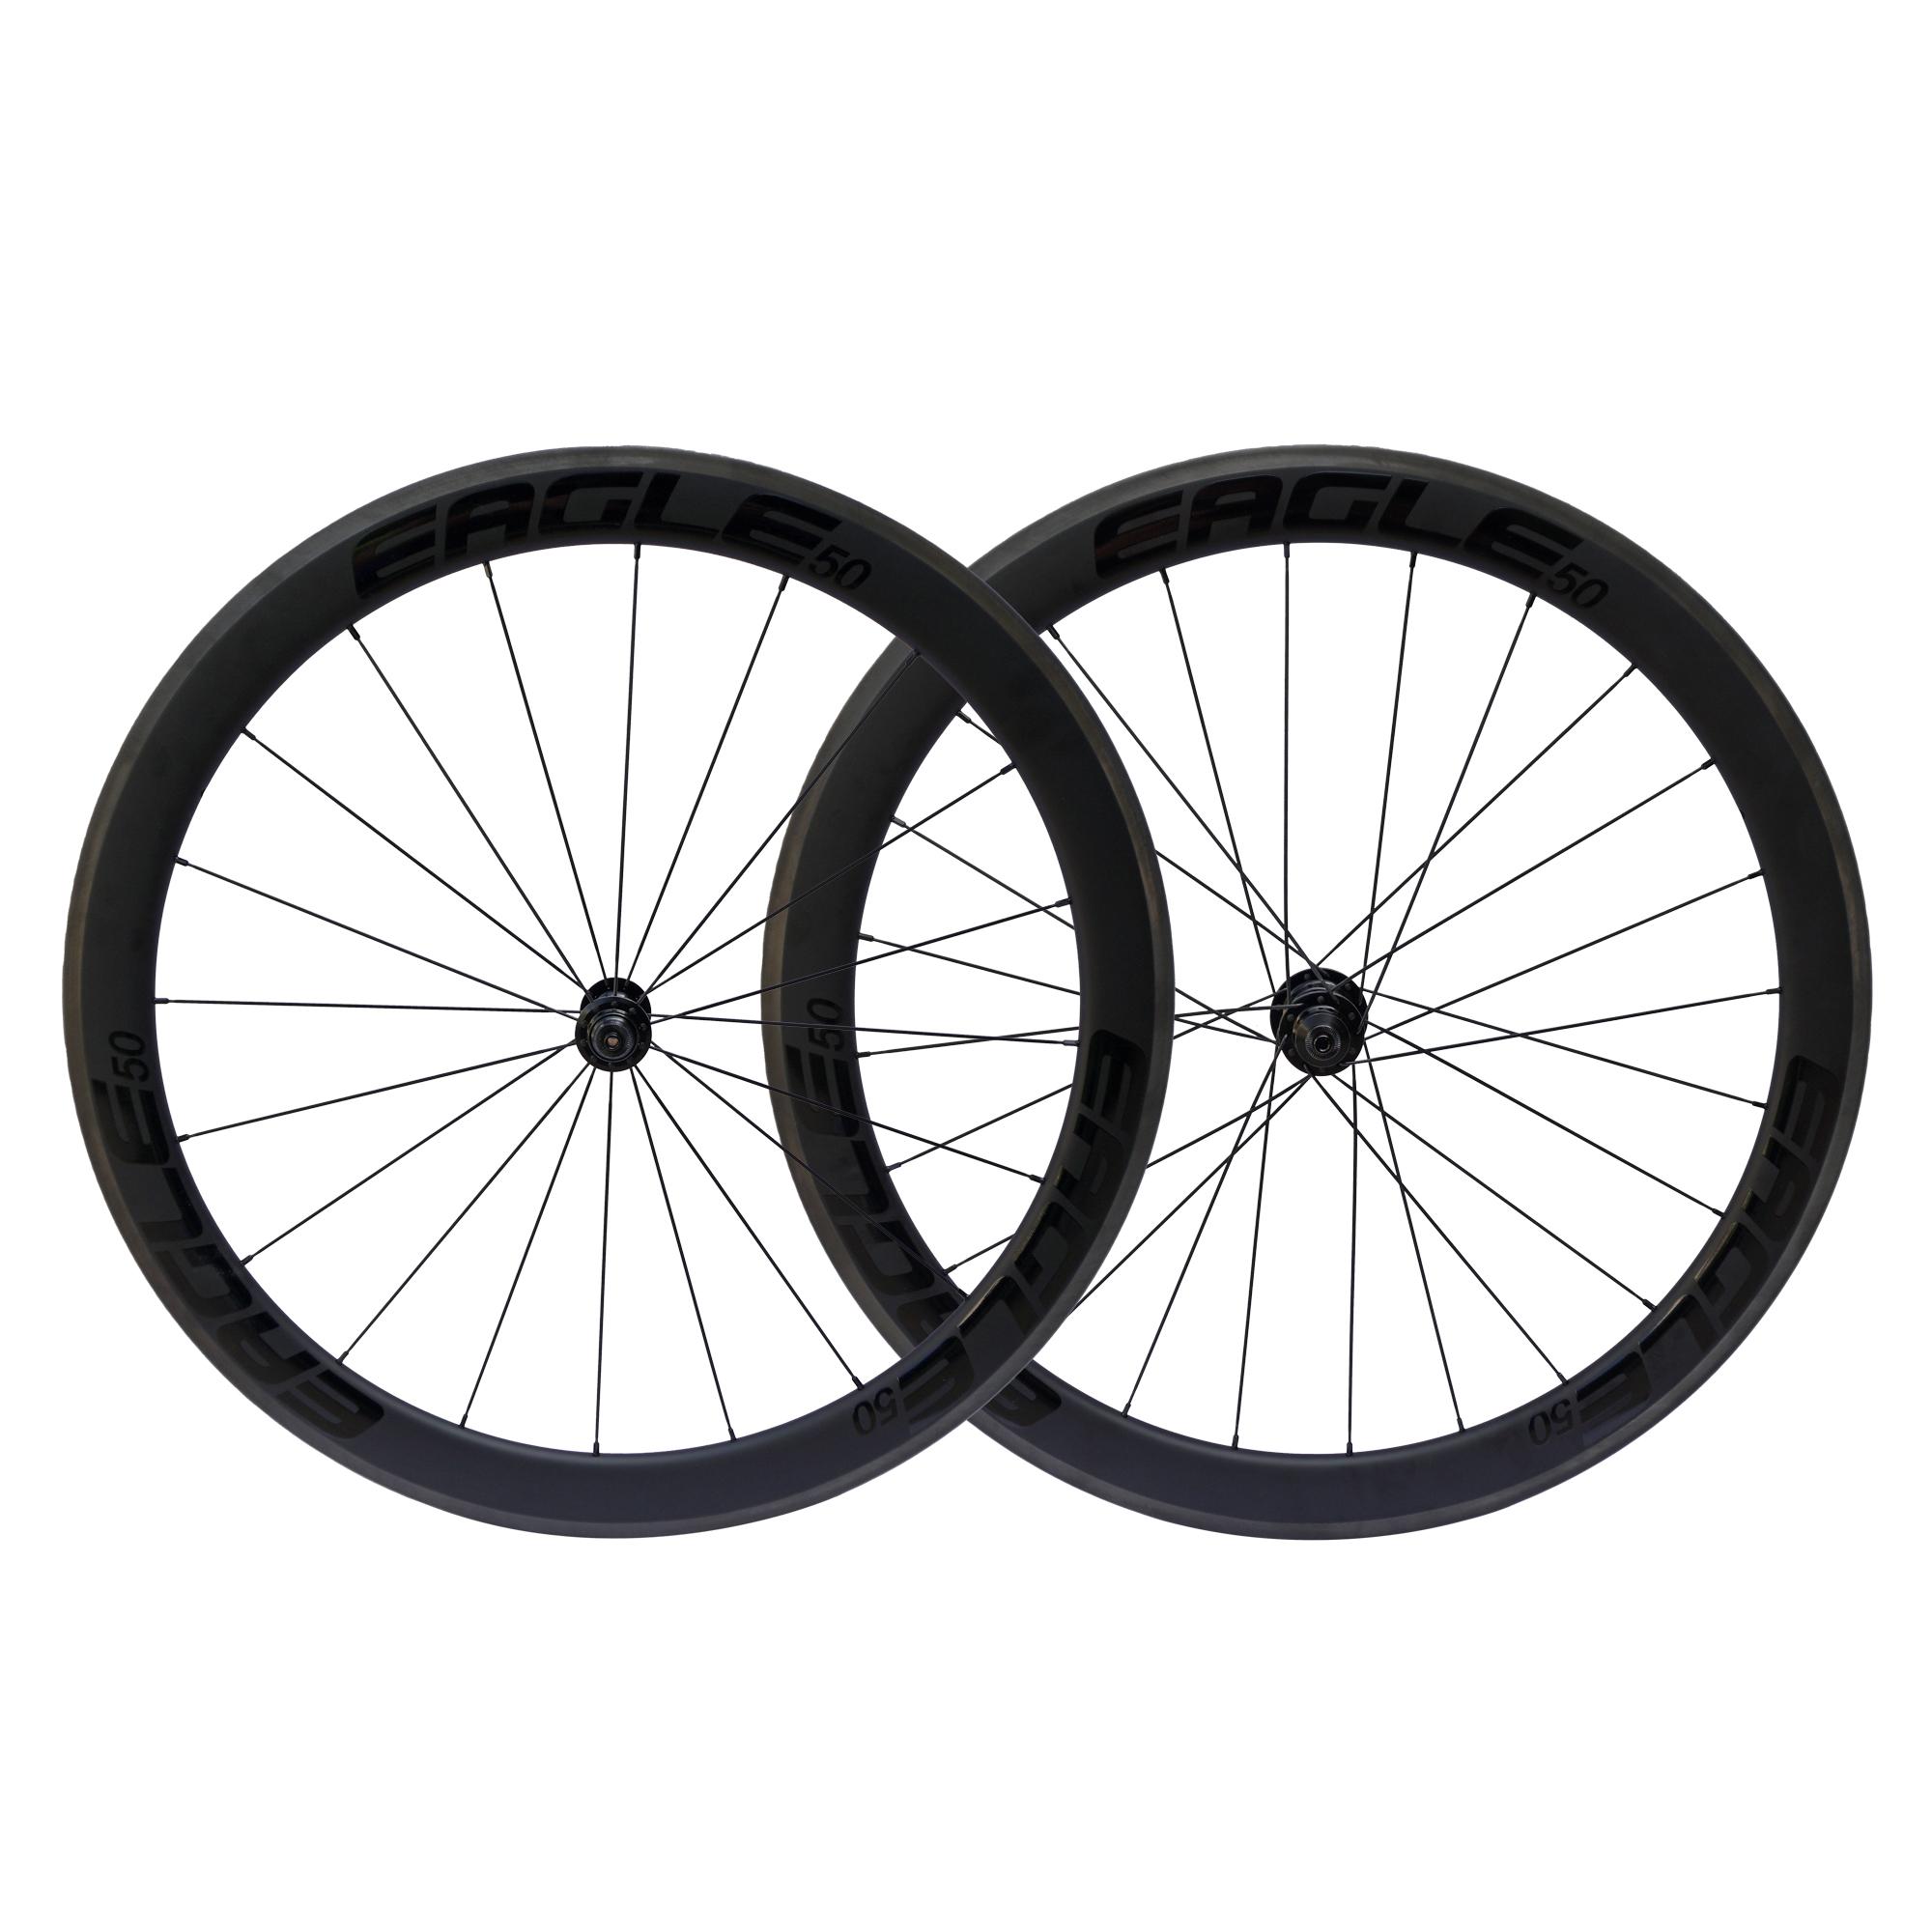 Eagle Bicycles Carbon Road Wheelset for Rim Brakes - Black graphics